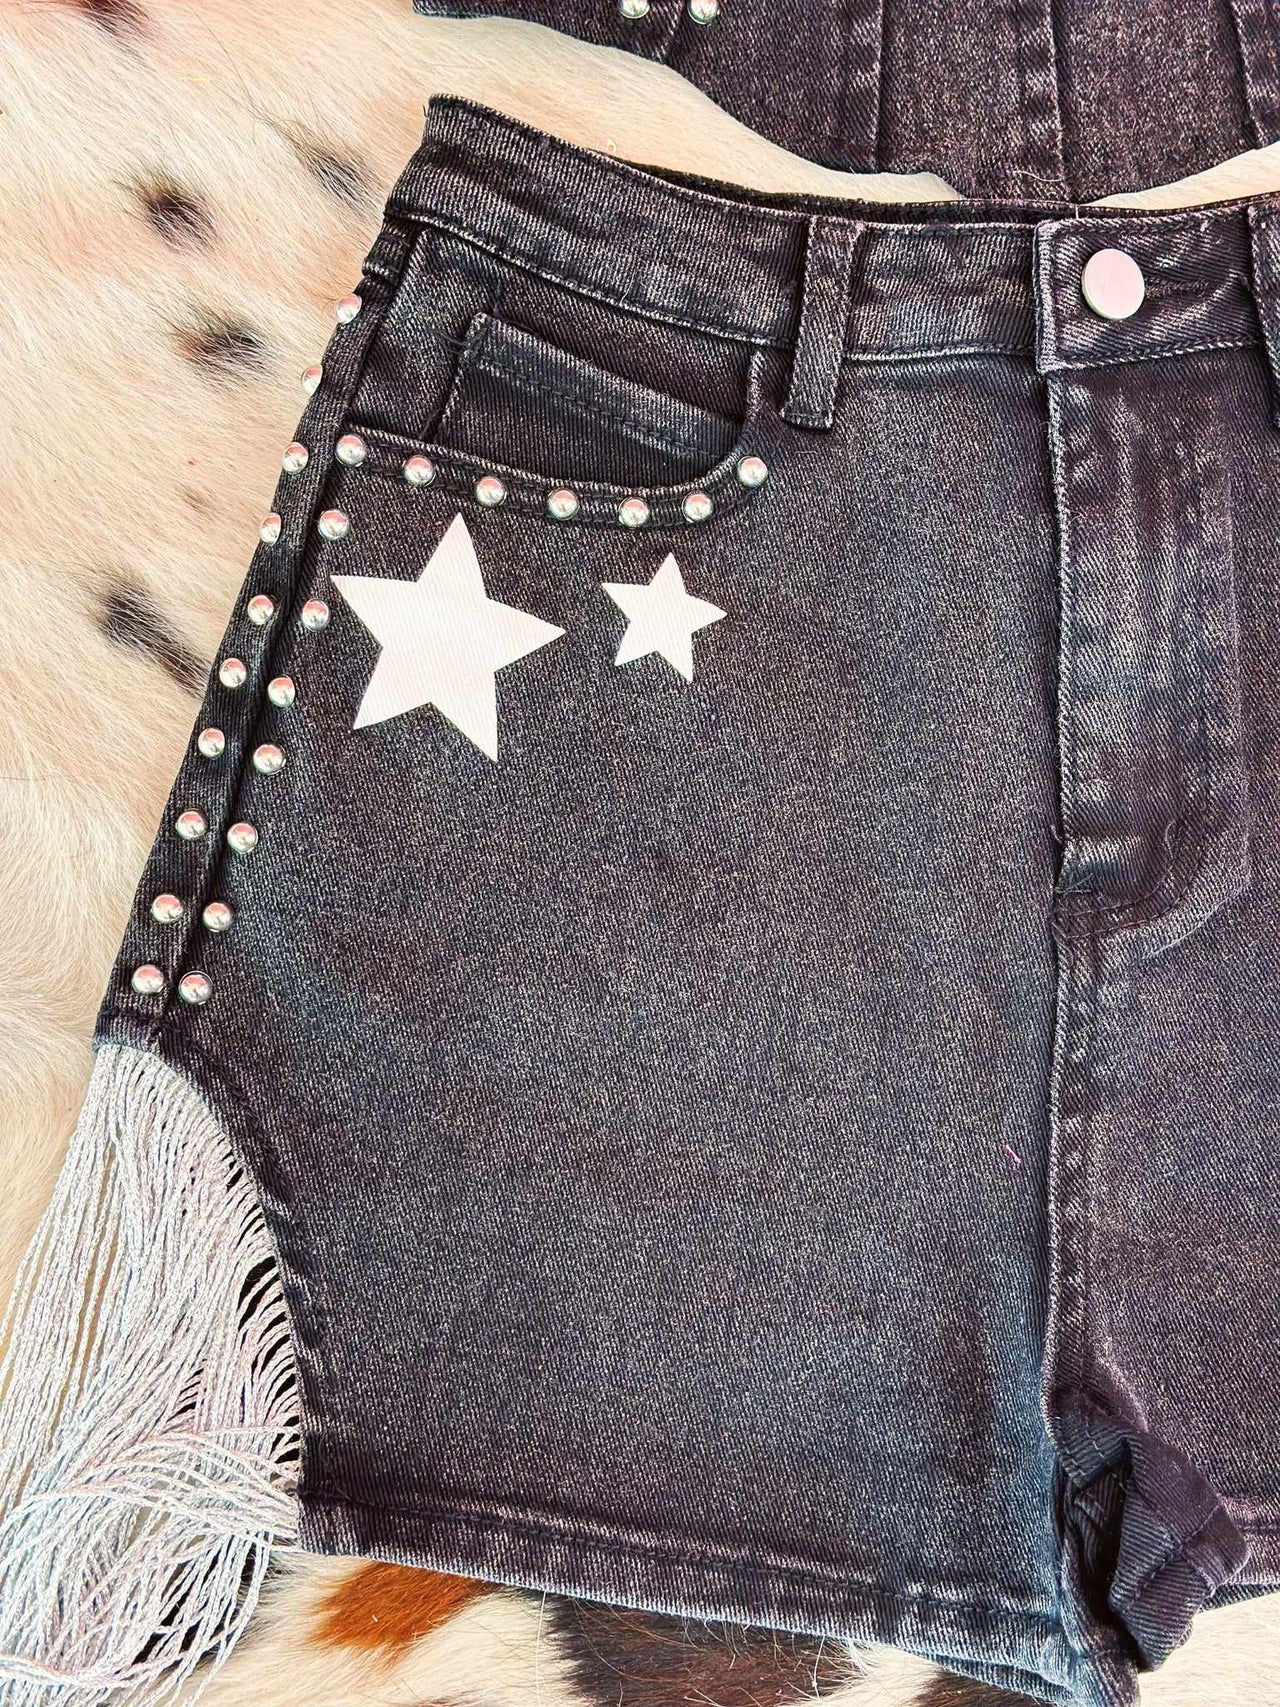 Black denim shorts with stars.